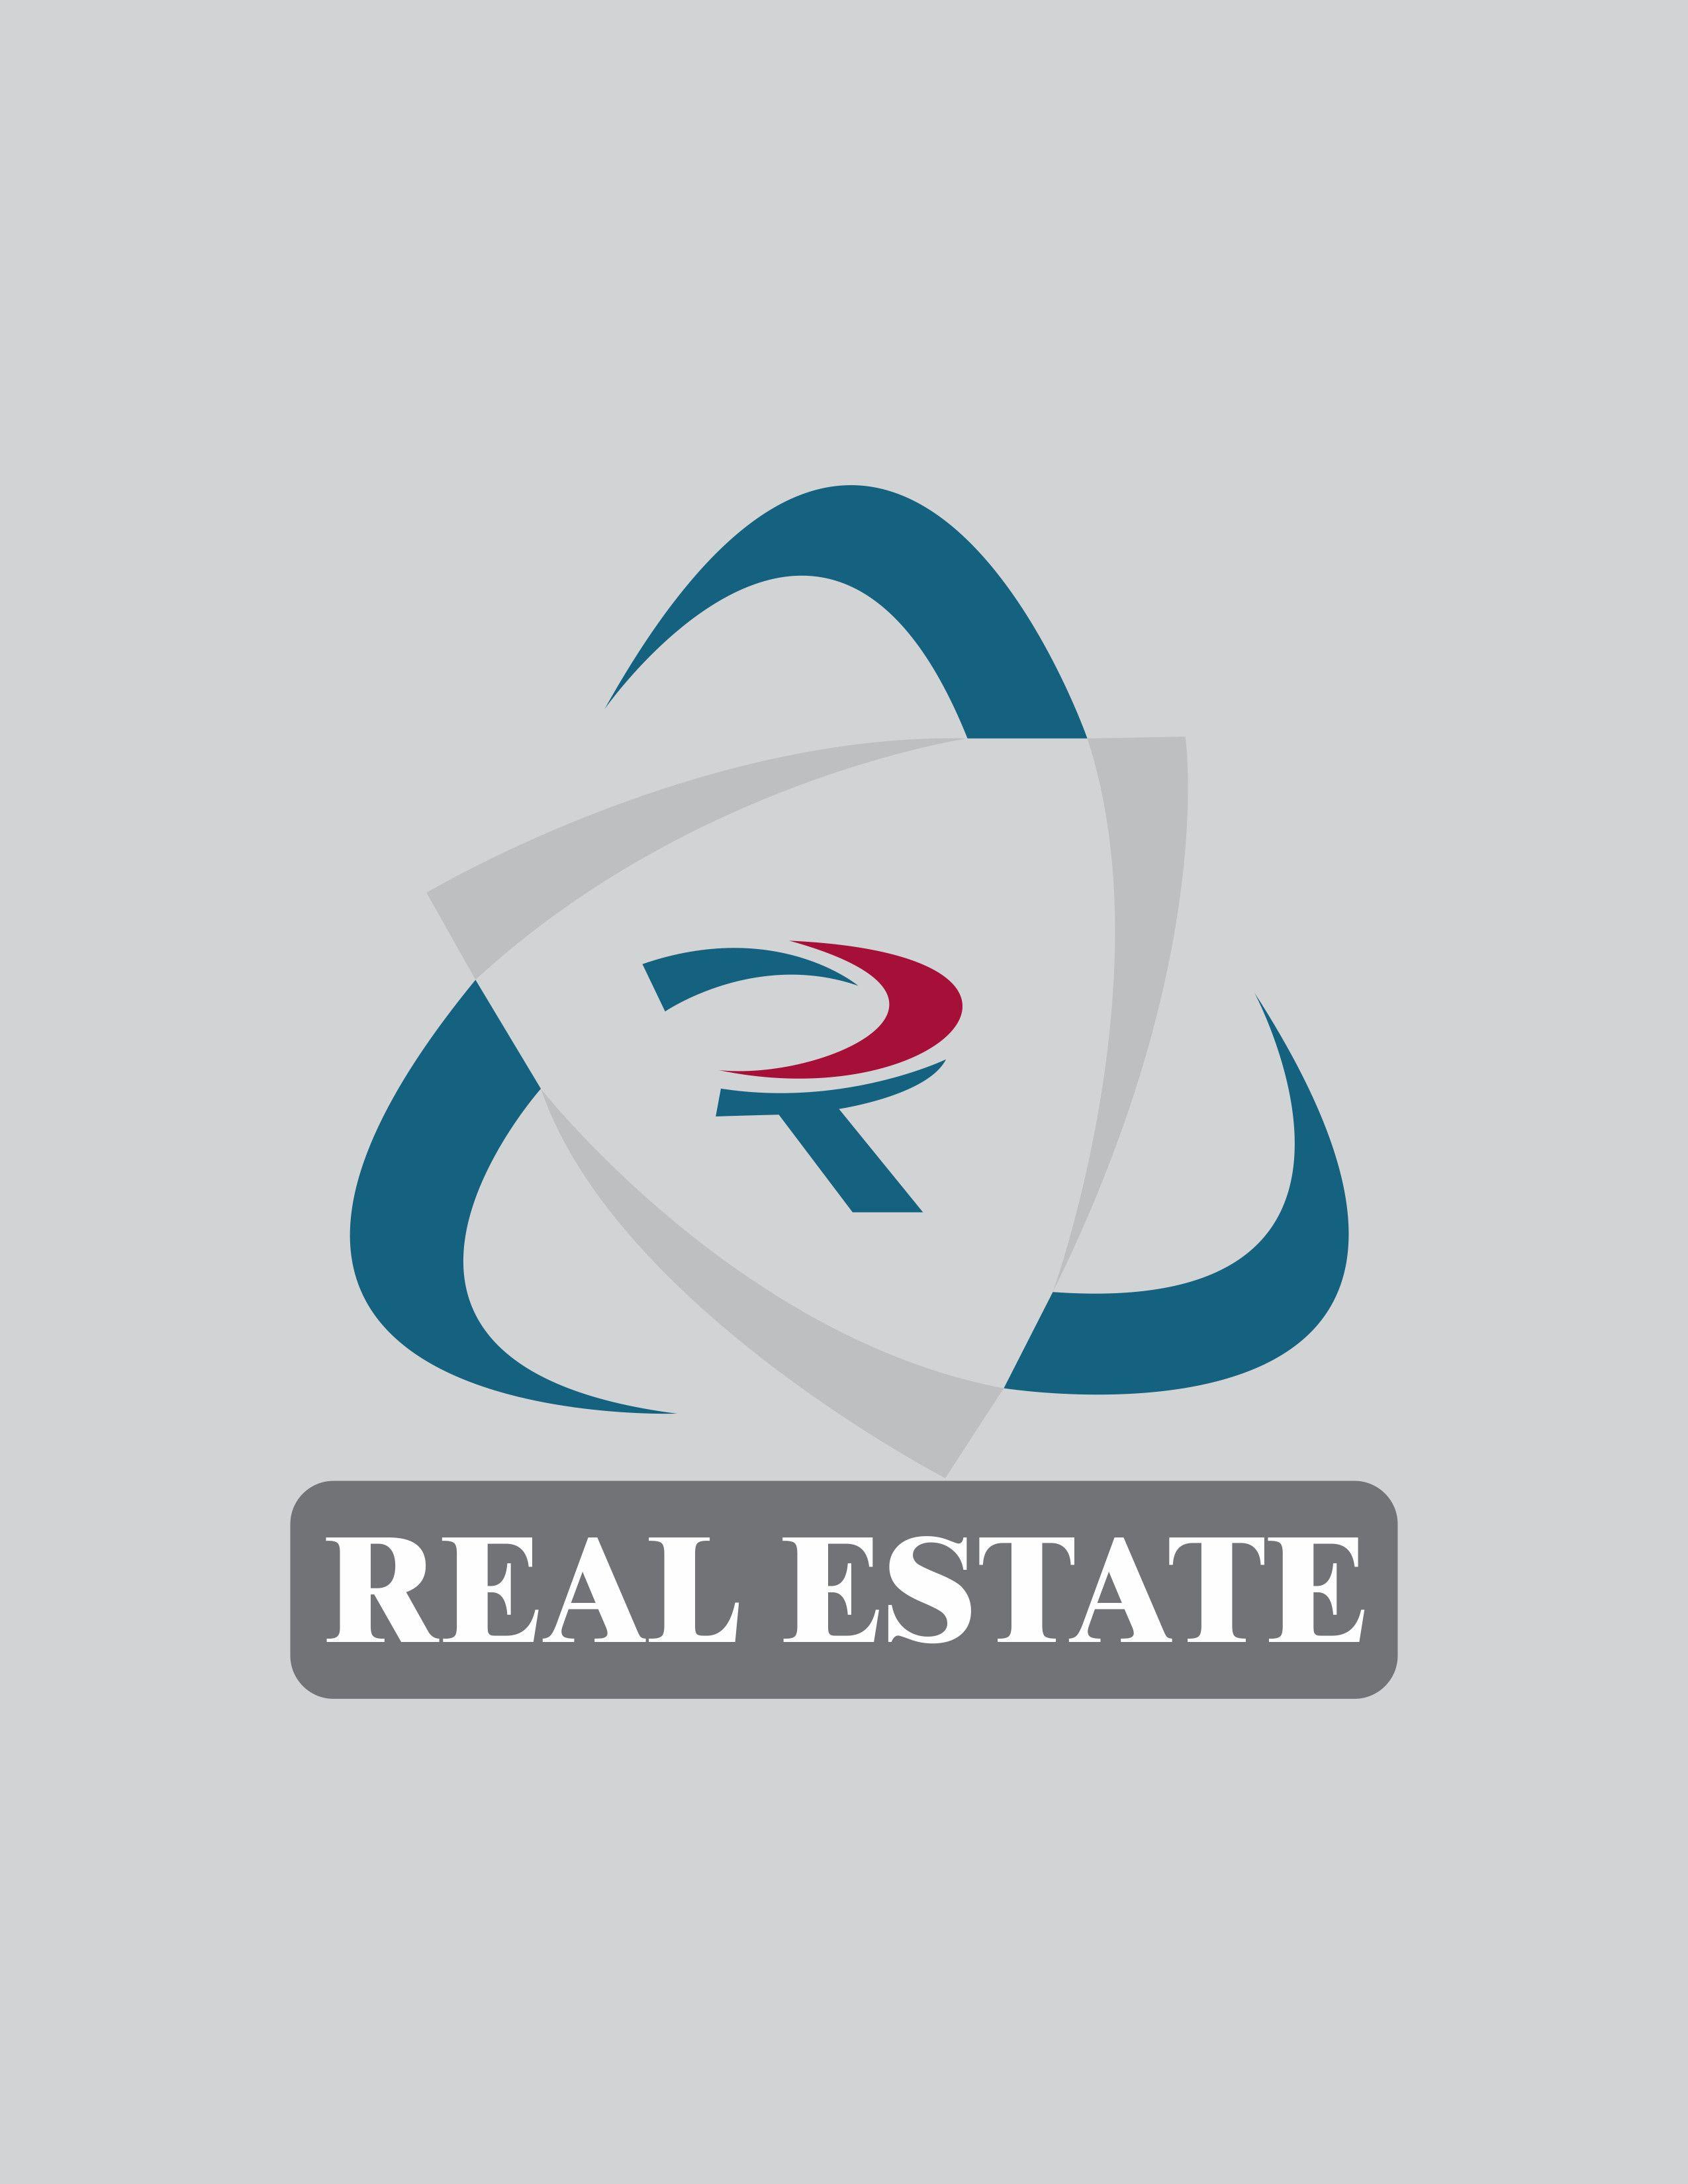 Cdr Logo - Top 4 Awesome Real Estate Logo Design CDR - Techfameplus